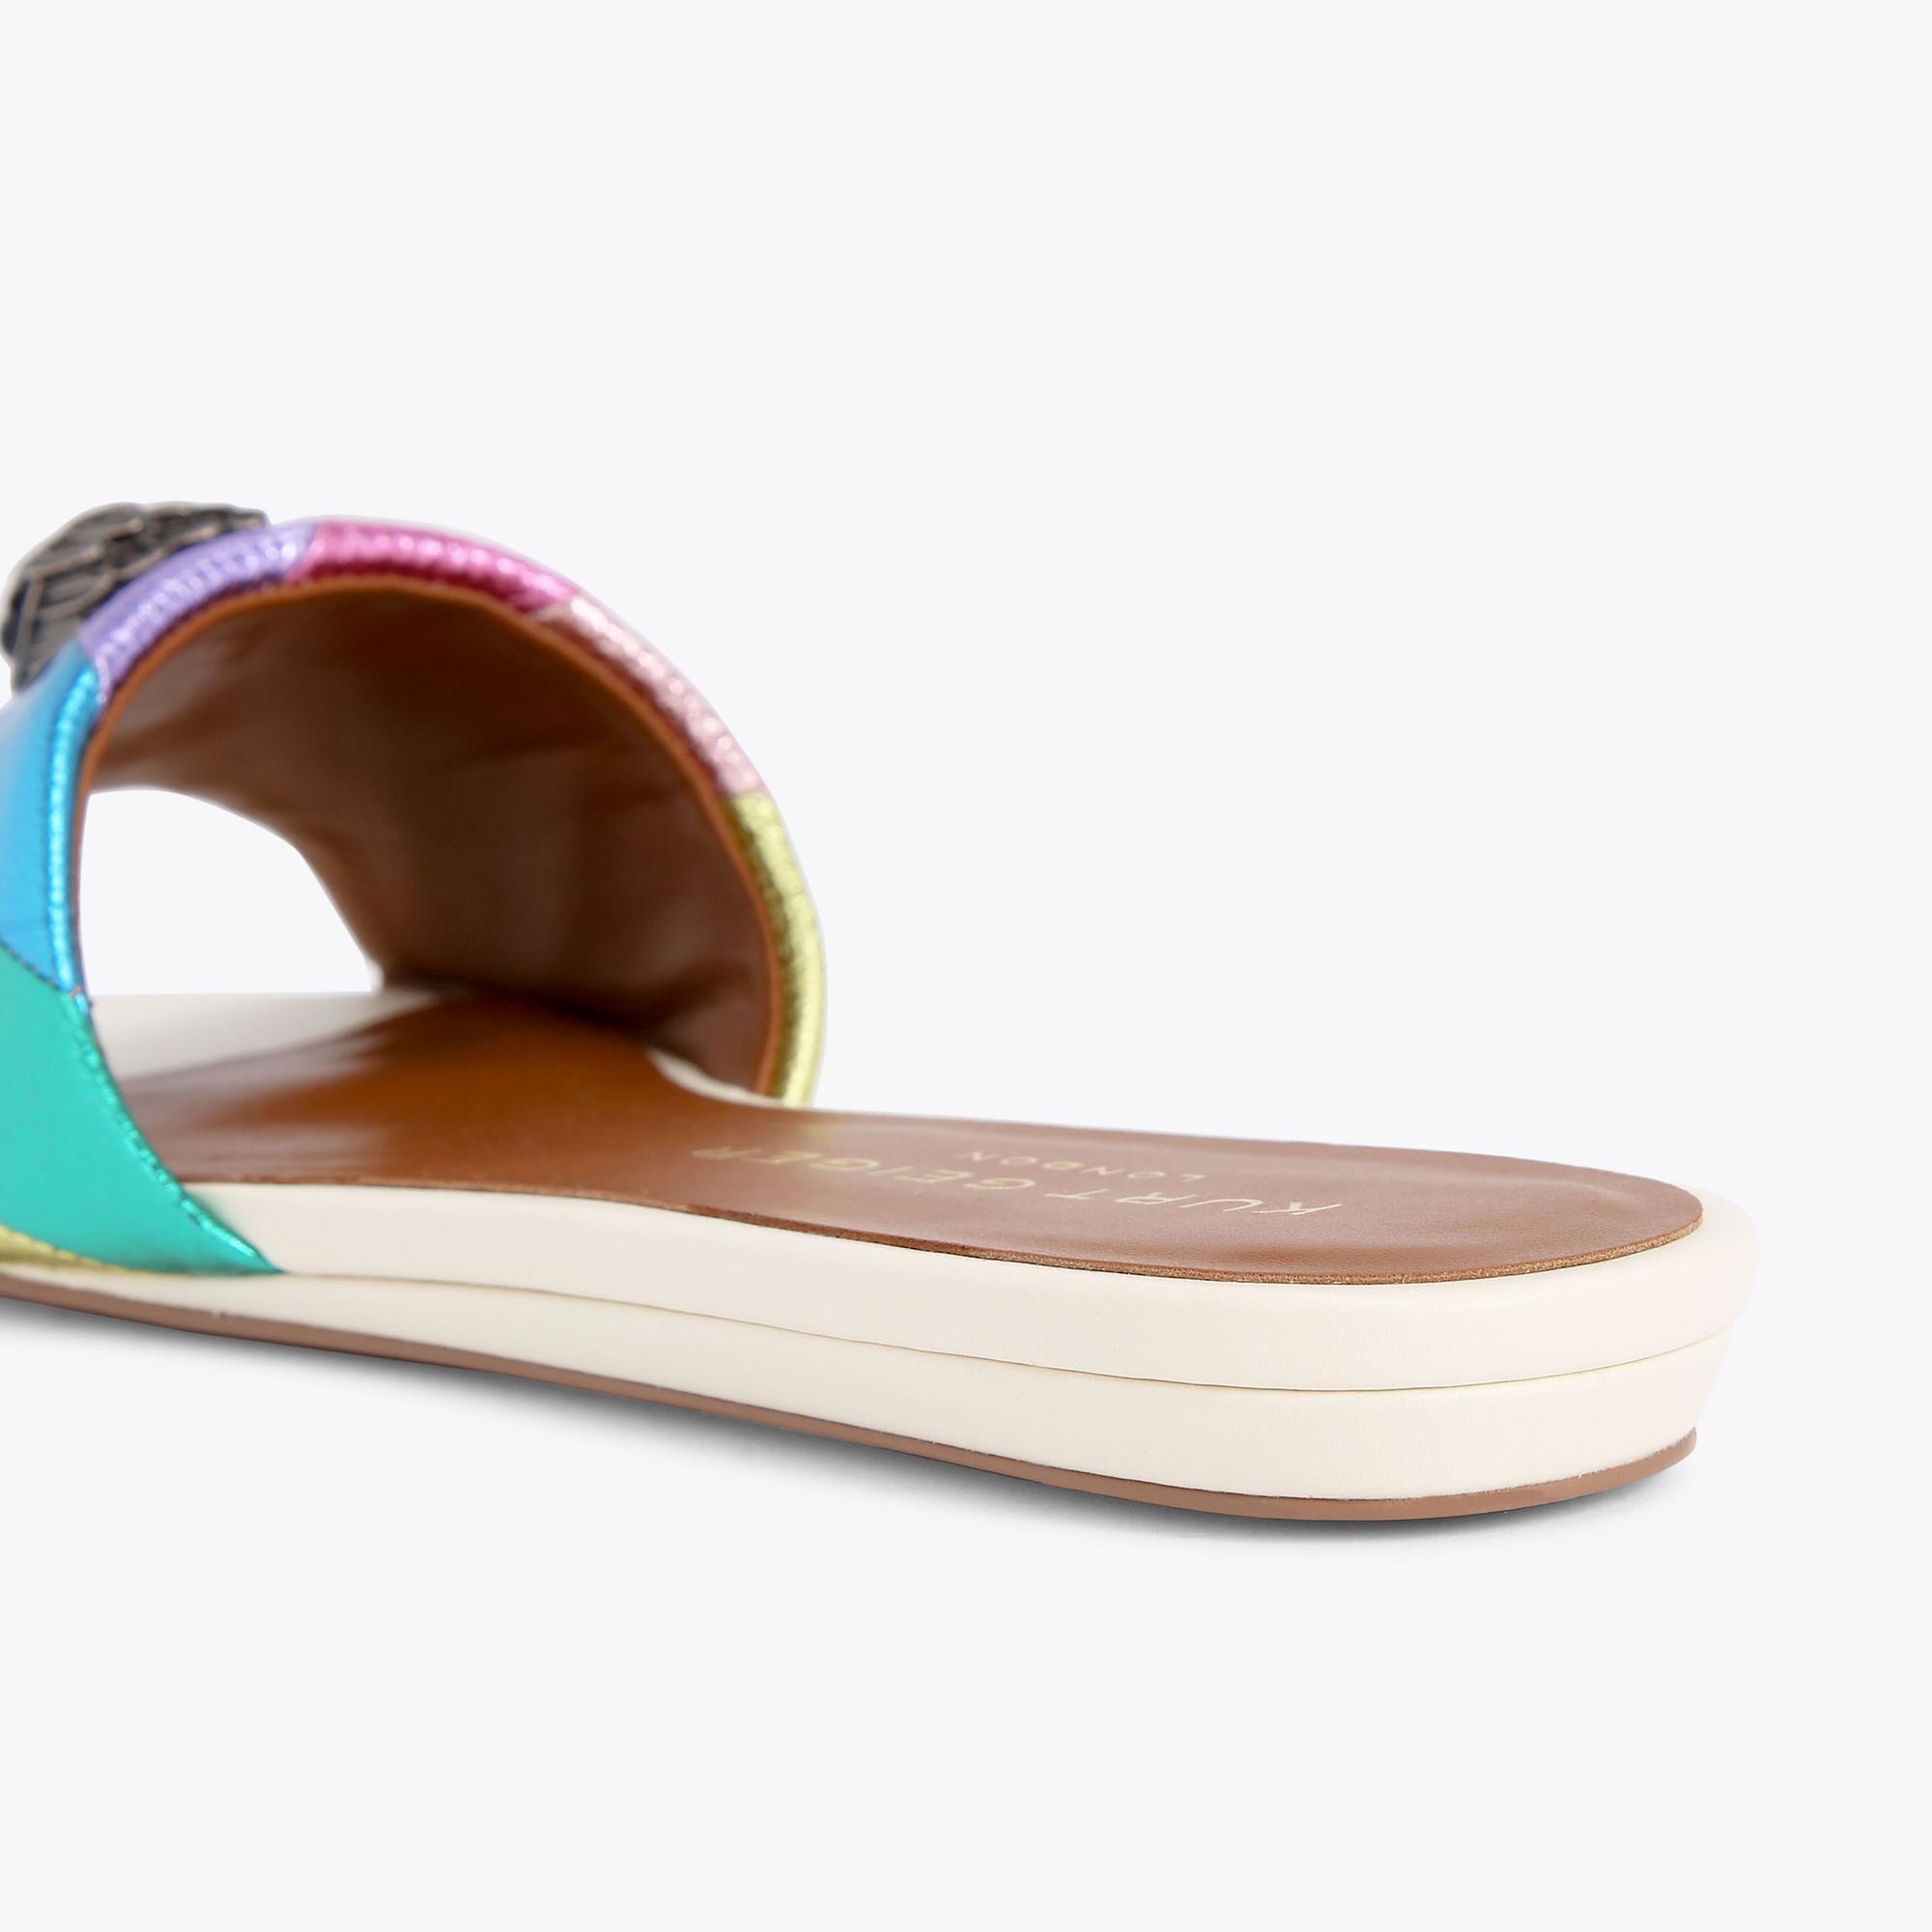 KENSINGTON FLAT SANDAL Rainbow Slip On Sandal by KURT GEIGER LONDON